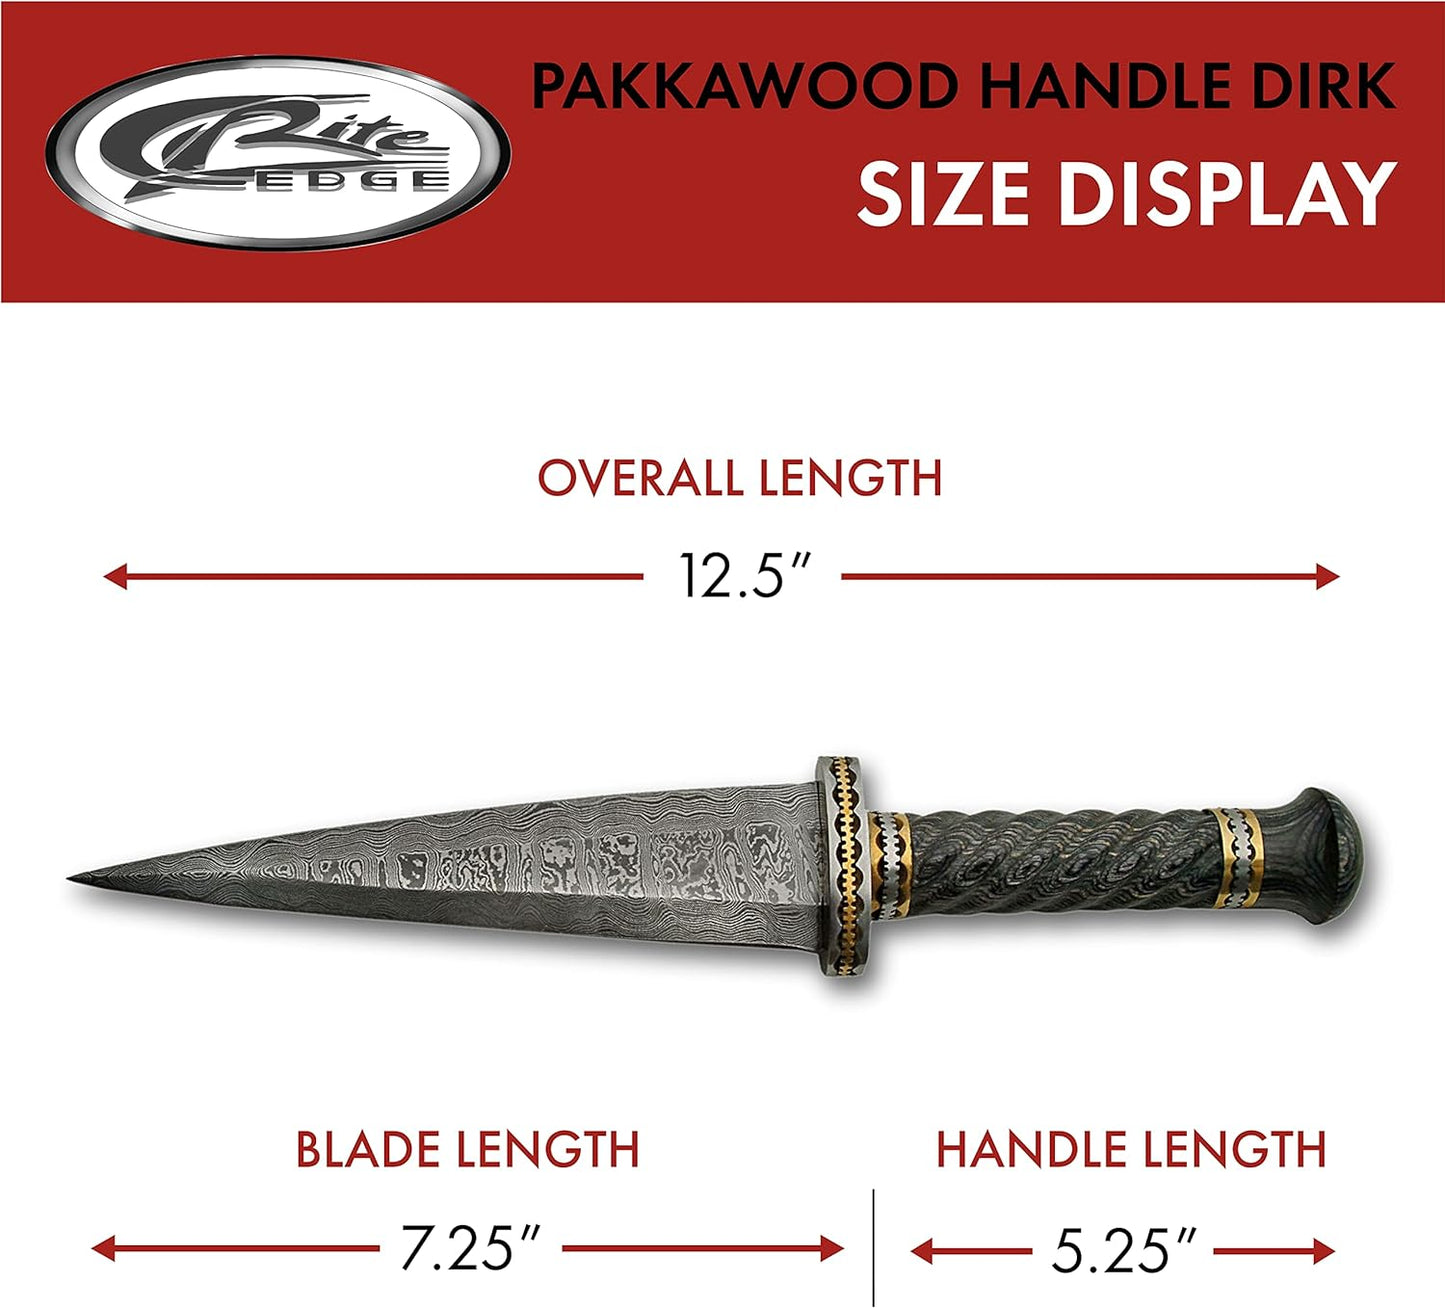 KD Damascus Steel Hunting Pakkawood Handle with Leather Sheath